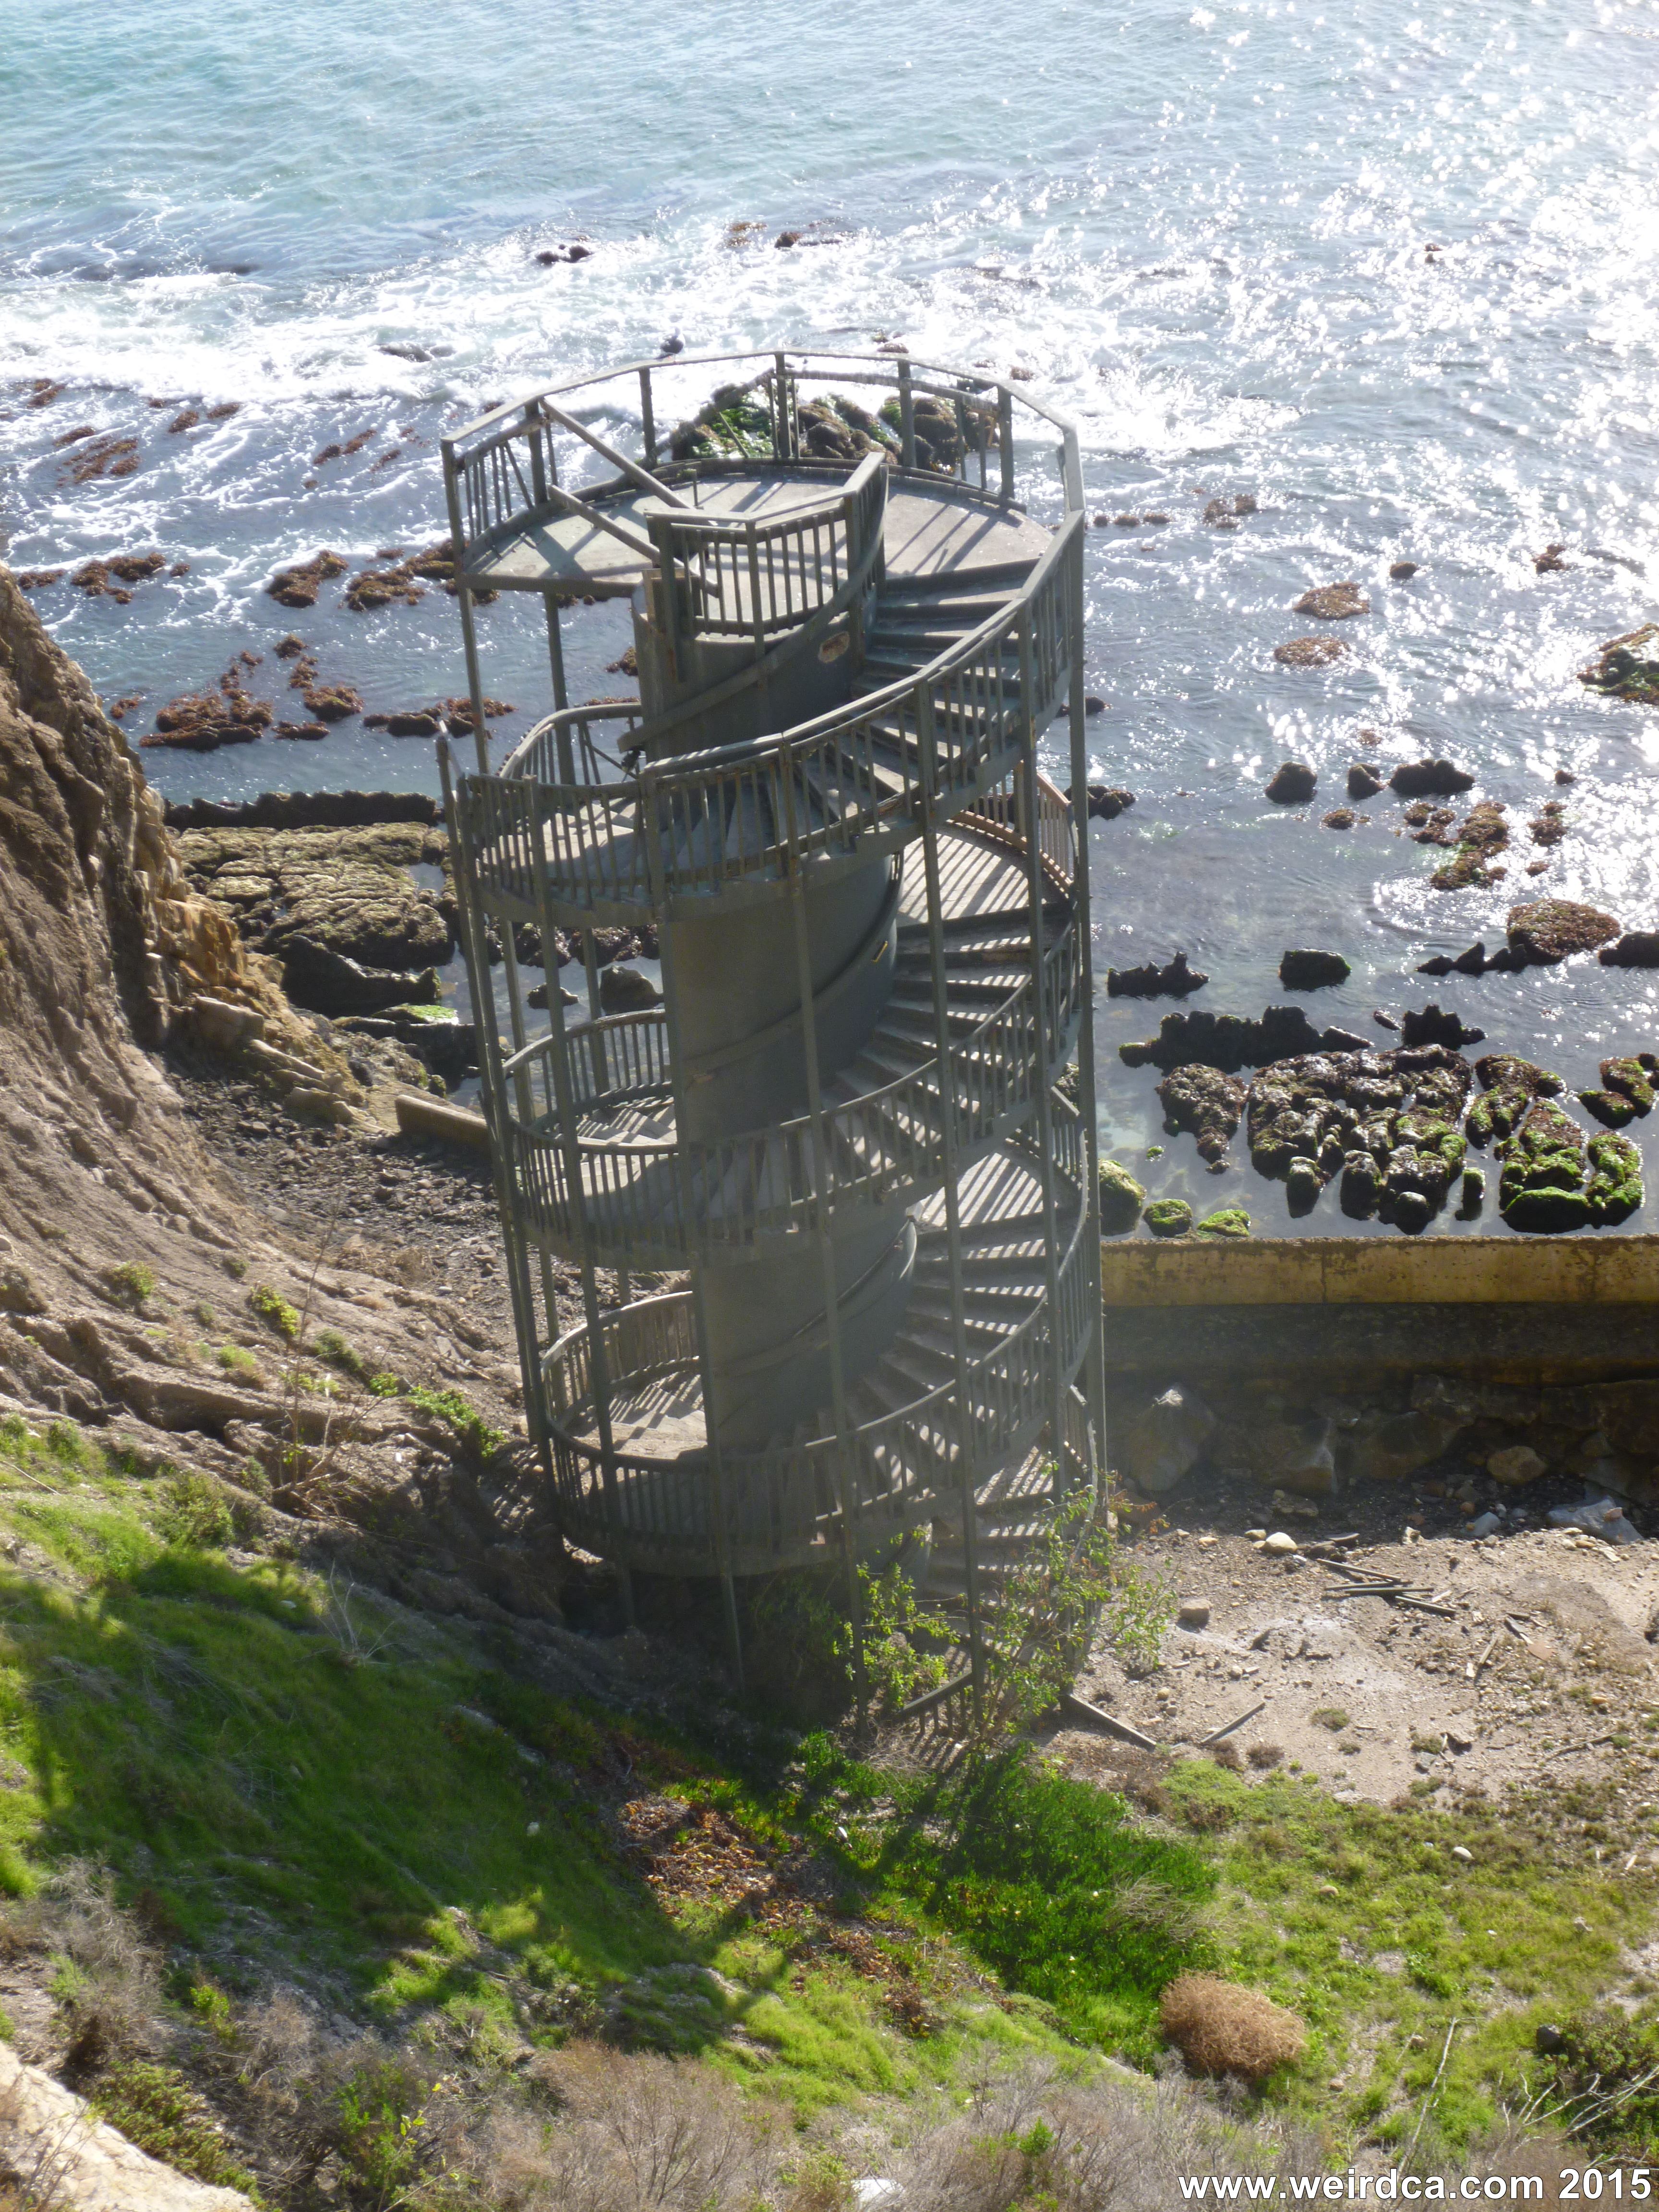 Stairway to Nowhere - Weird California